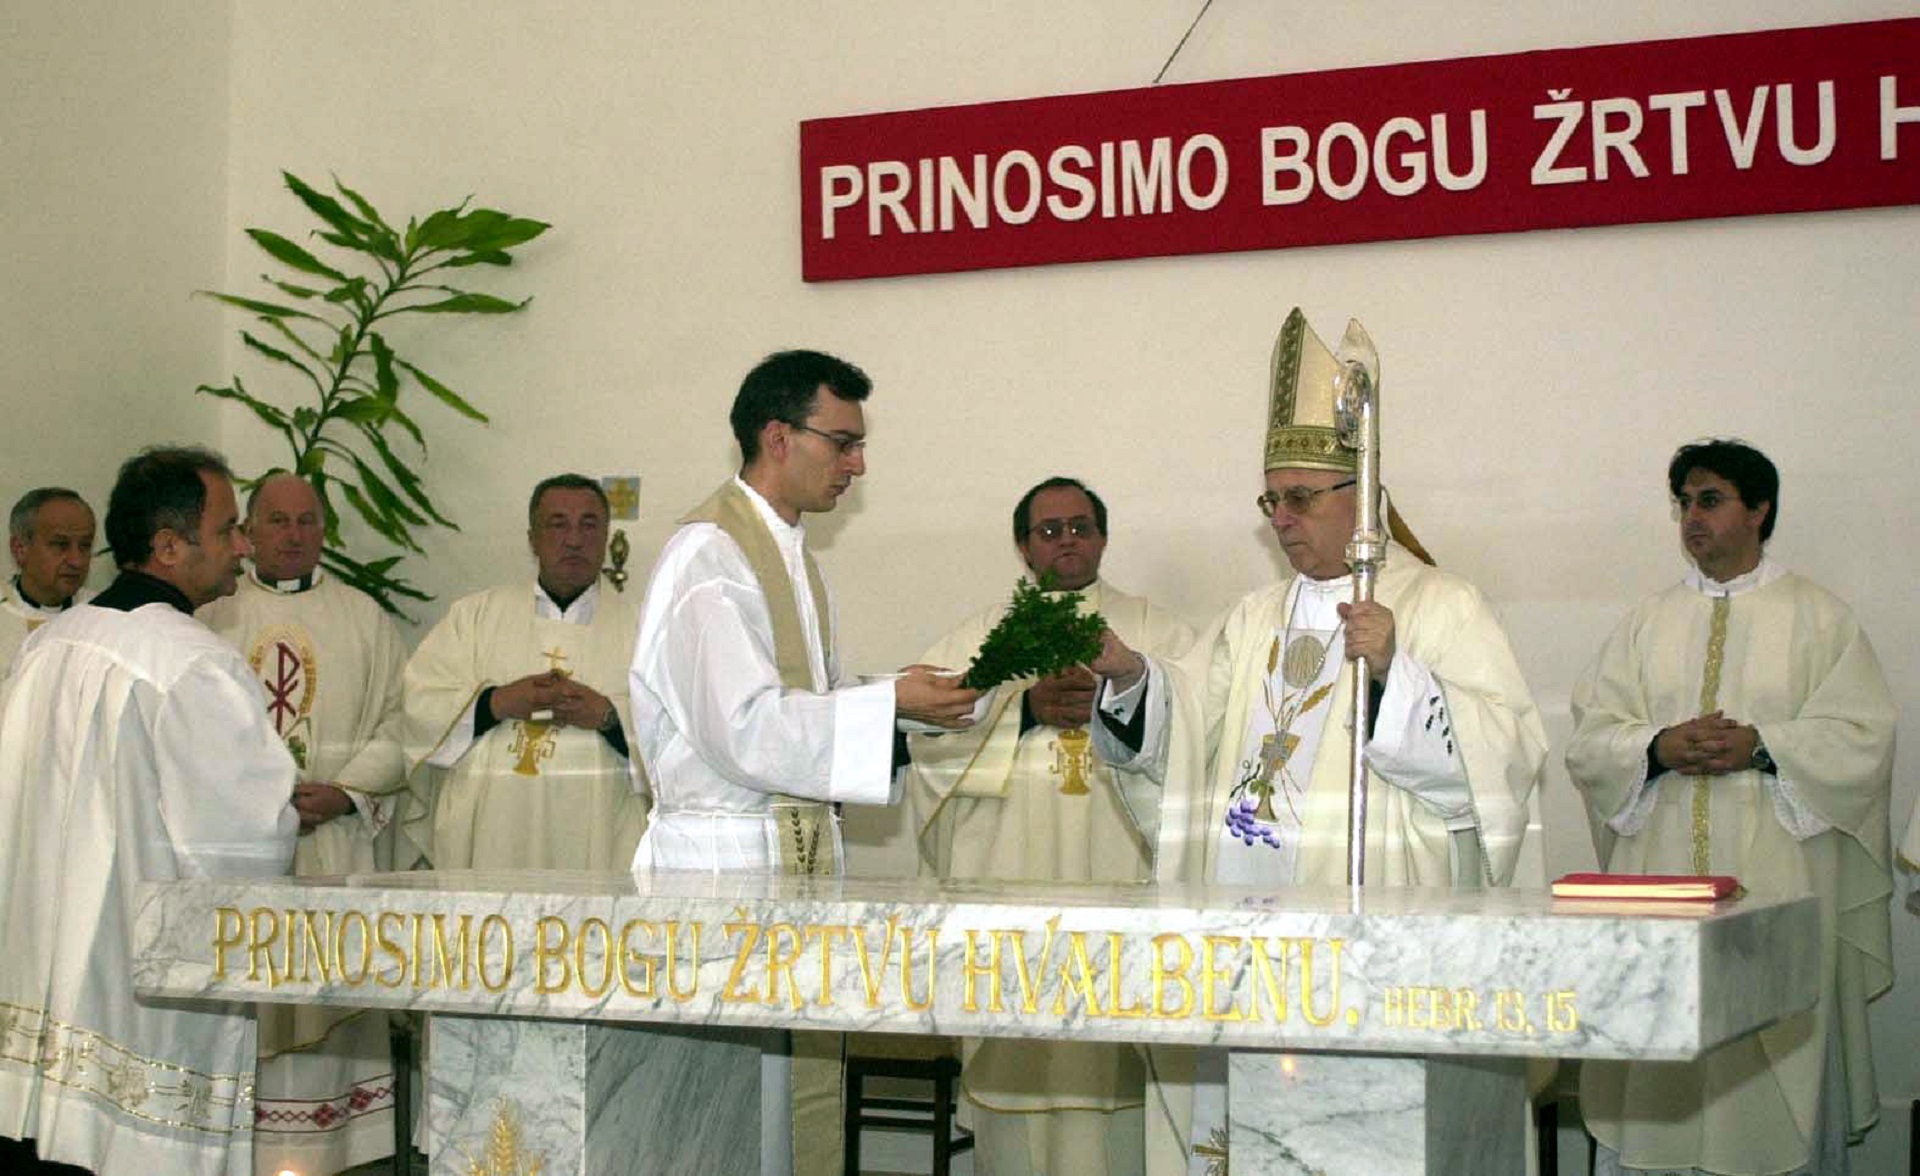 Beli Manastir, 10.11.2002 -  Biskup Ðakovacko-srijemski msgr. Marin Srakiæ posvetio je oltar i crkvu Sv. Martina u Belom Manstiru obnovljenu nakon Domovinskog rata.
foto FaH